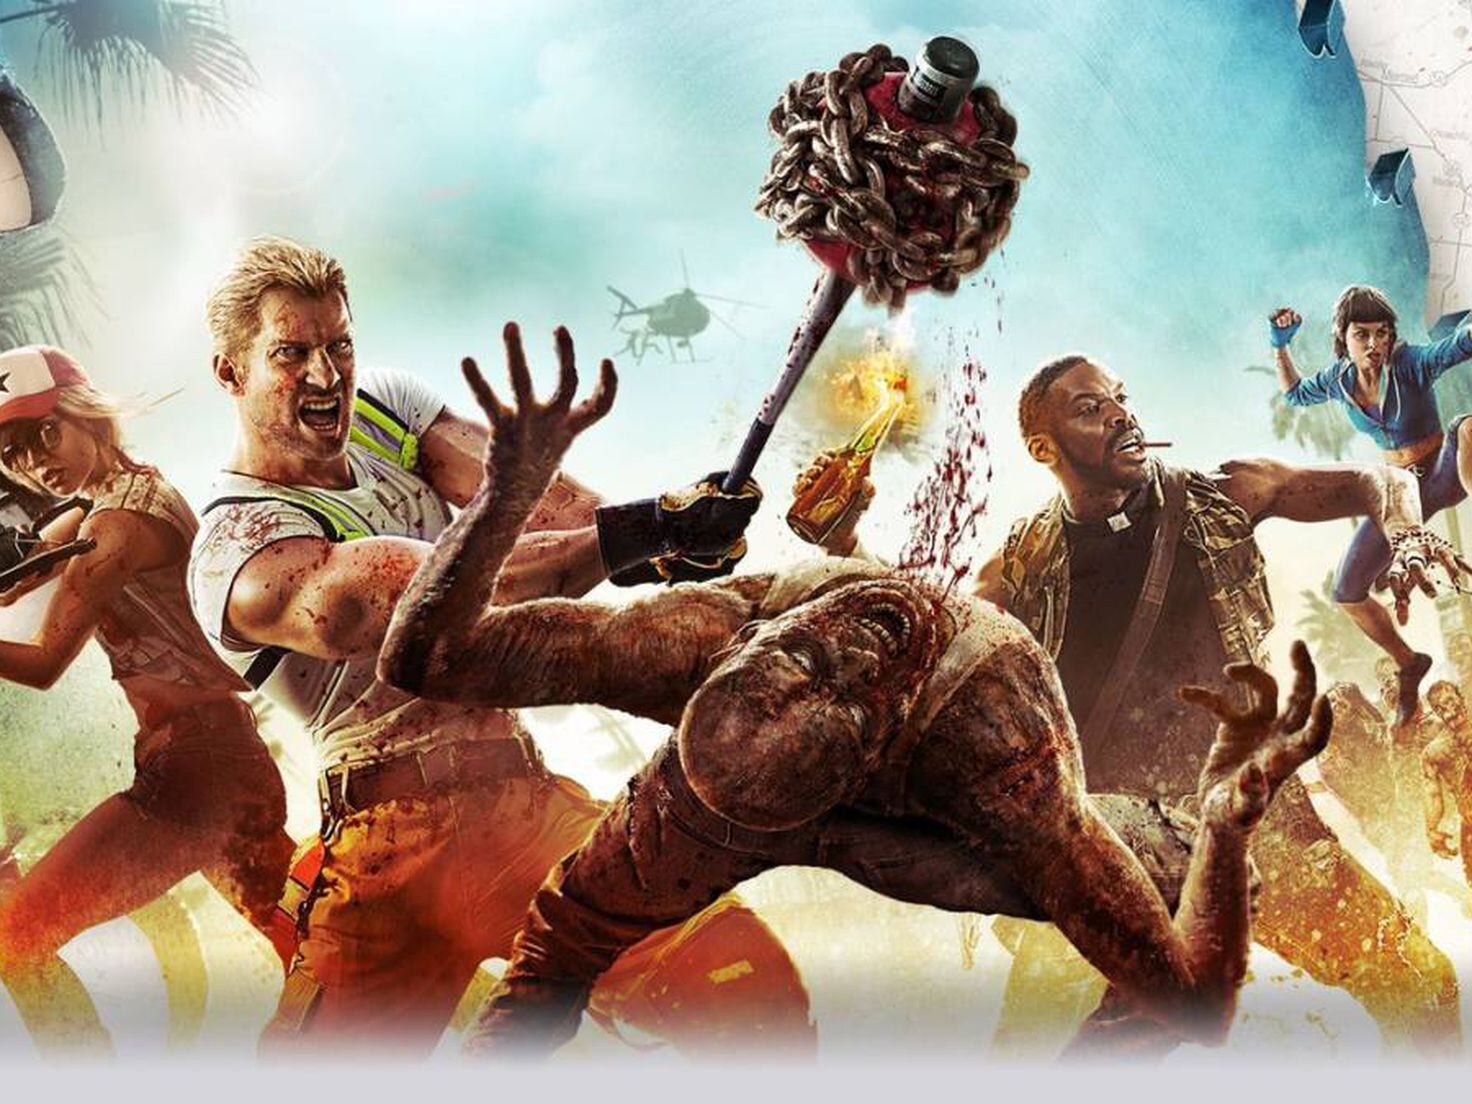 Dead Island 2 Deluxe Edition - Xbox Series X